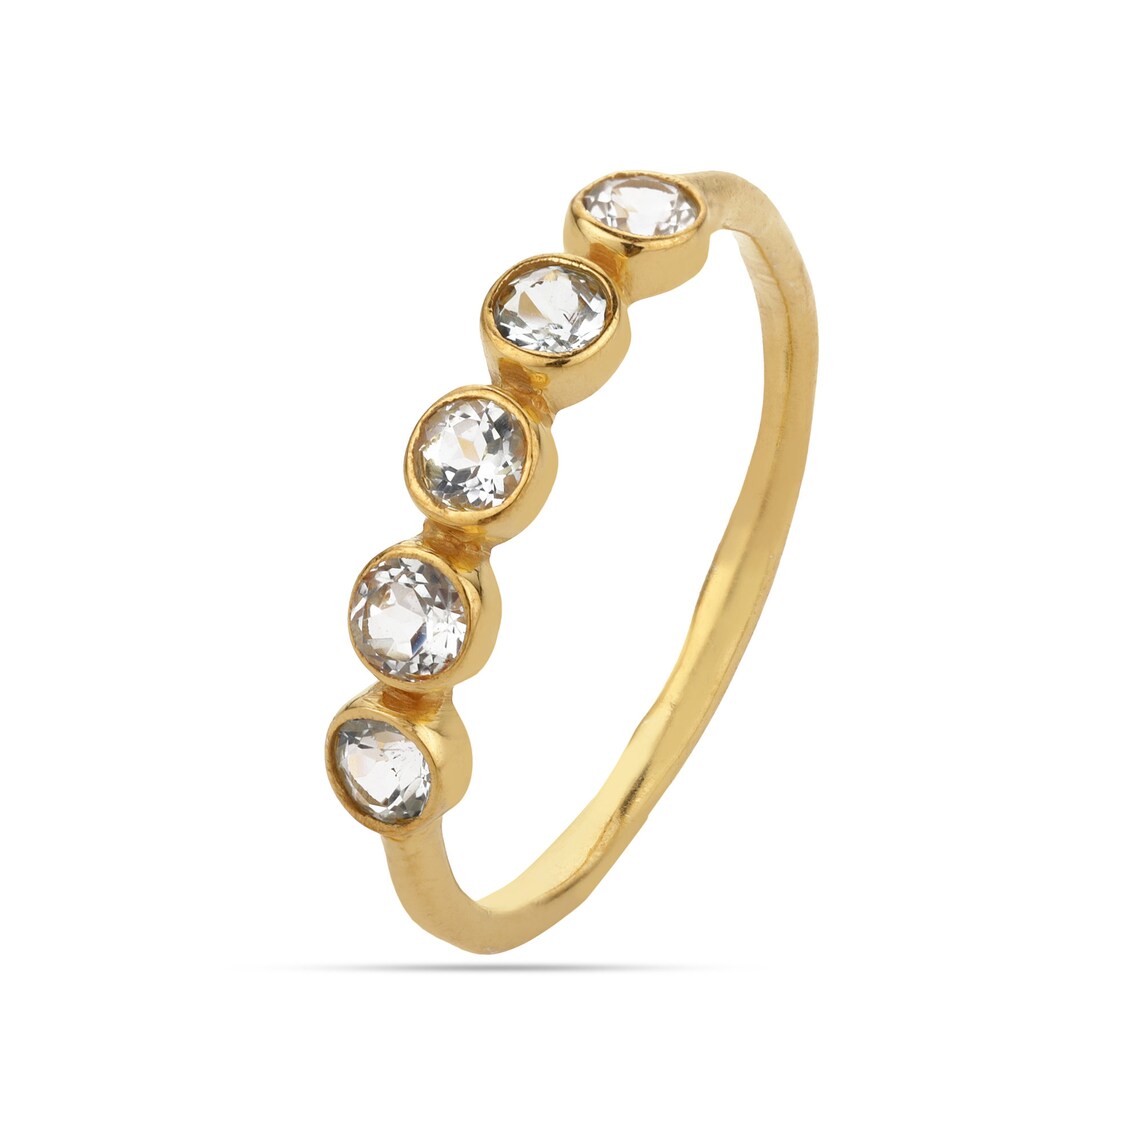 Blue Topaz Ring - Gold Blue Topaz Ring - November Birthstone - Half Eternity Ring - Blue Topaz Jewelry - Bezel Ring - Delicate Ring